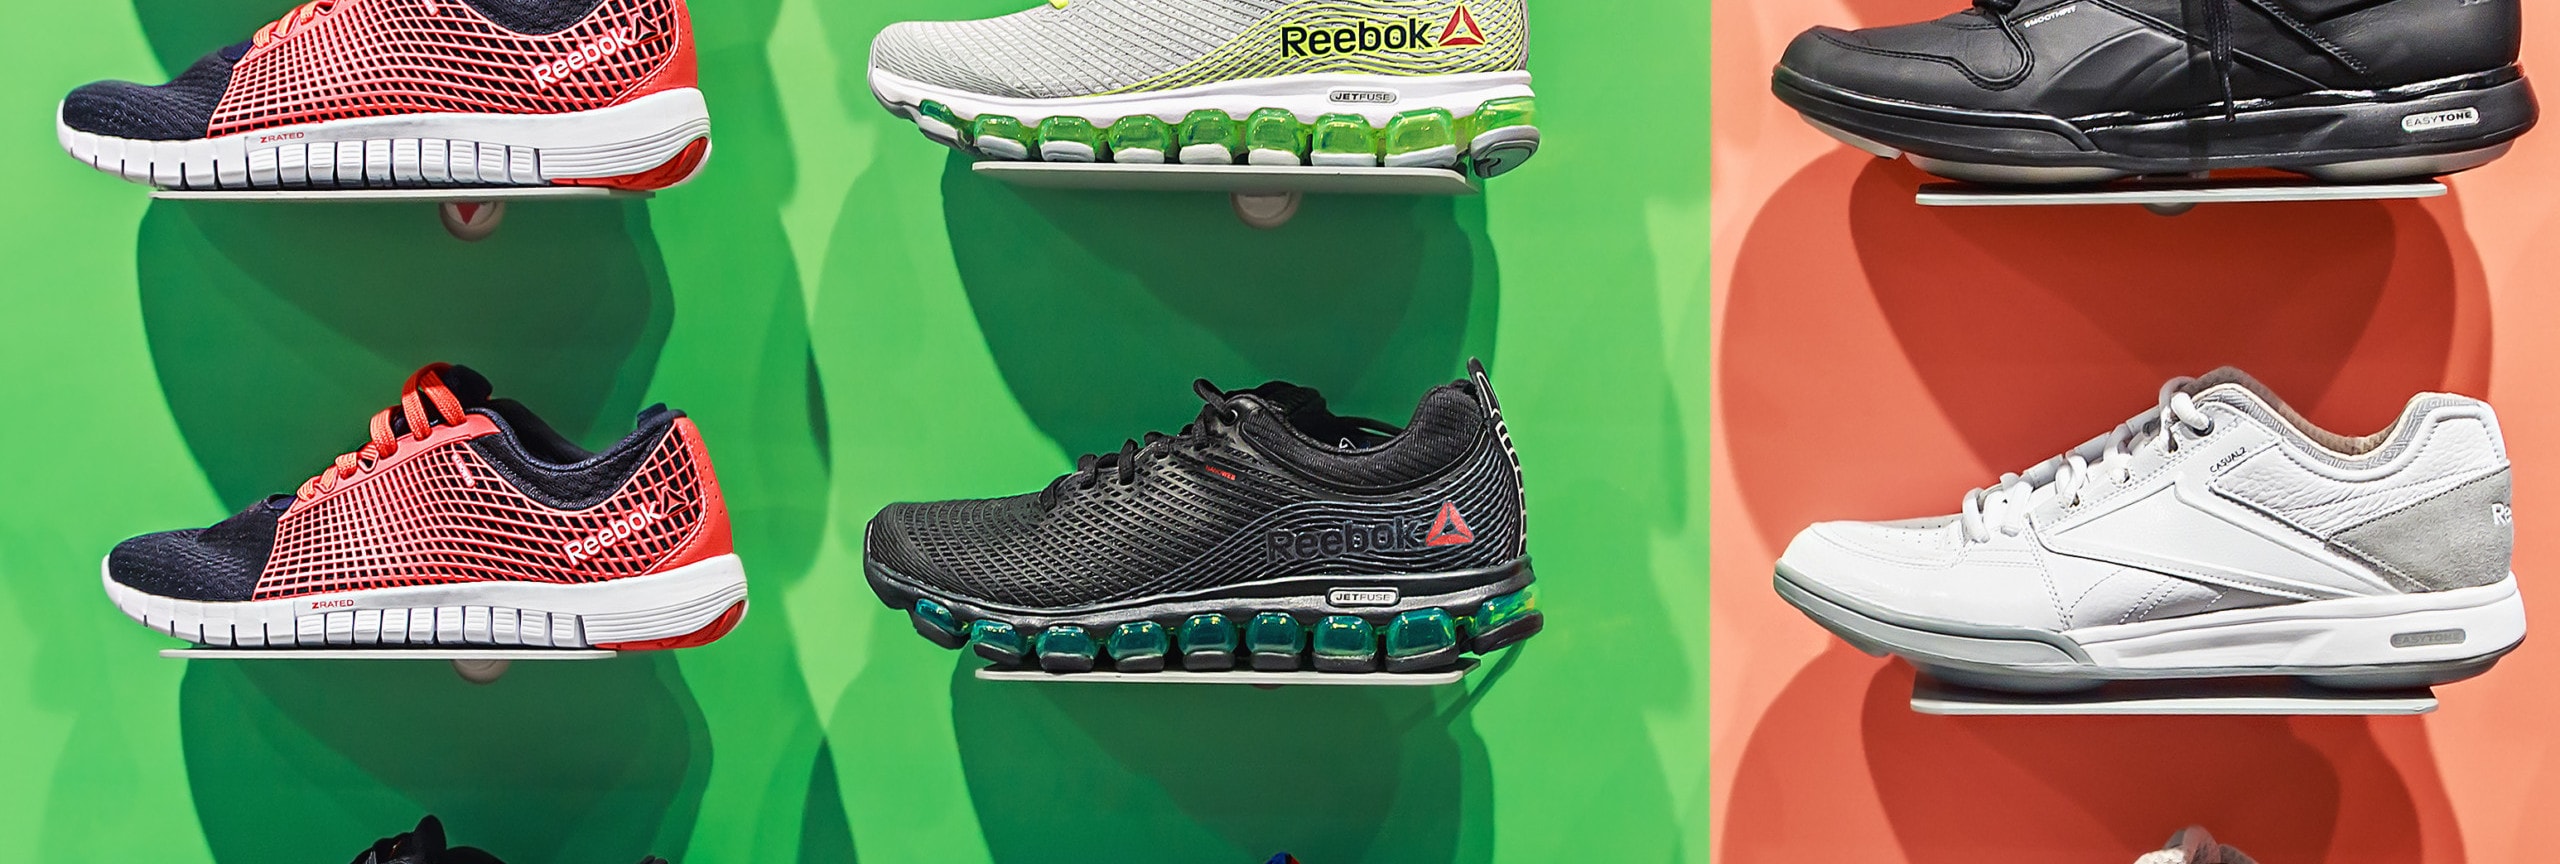 ontgrendelen Zenuw kraai Adidas Acquires Reebok, Closes Gap on Nike | Brand Finance